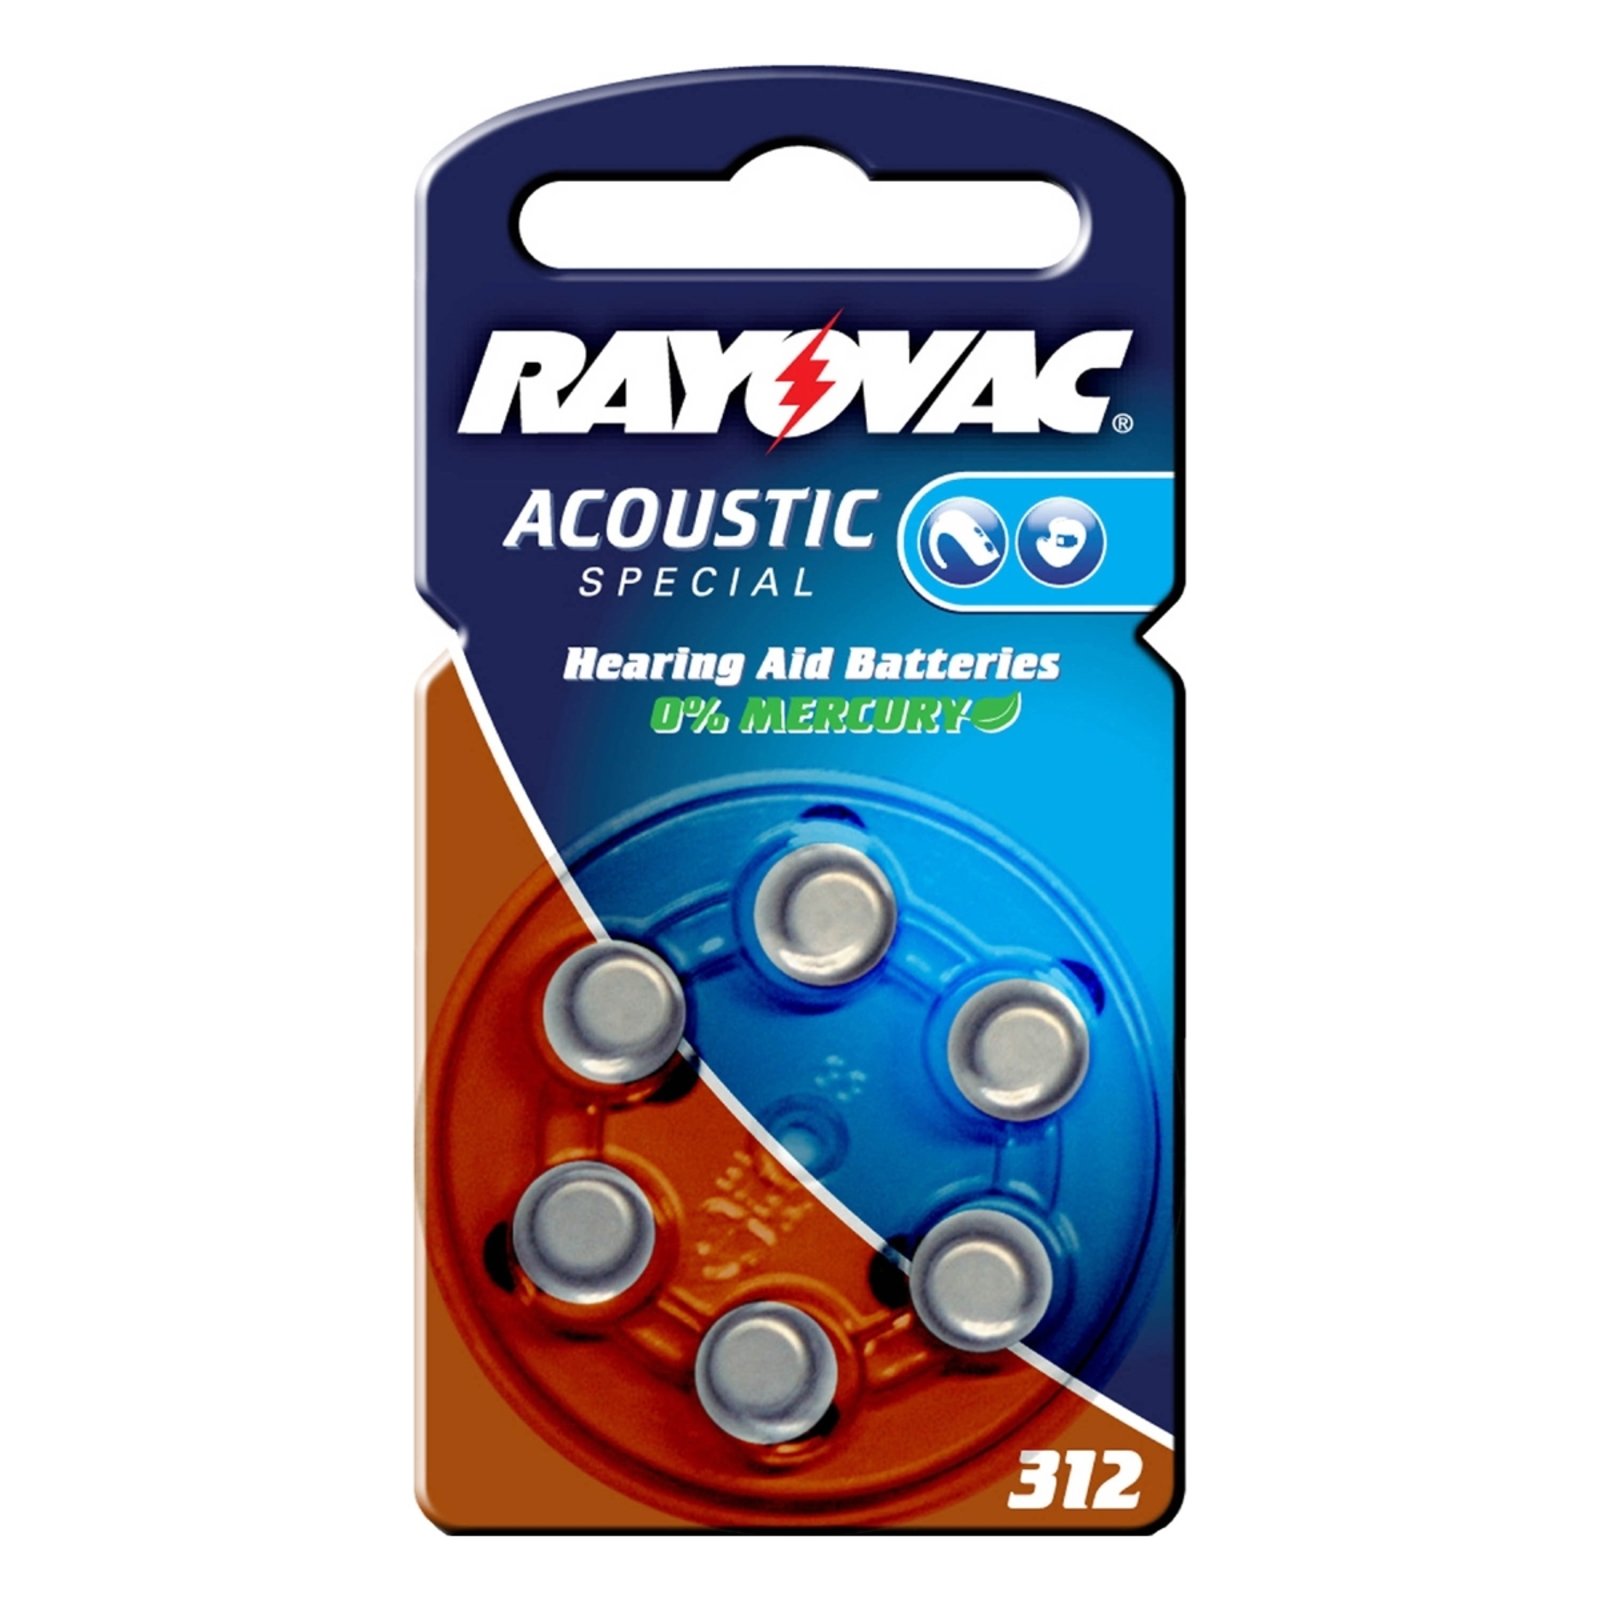 Knappbatteri Rayovac 312 Acoustic 1,4 V 180m/Ah